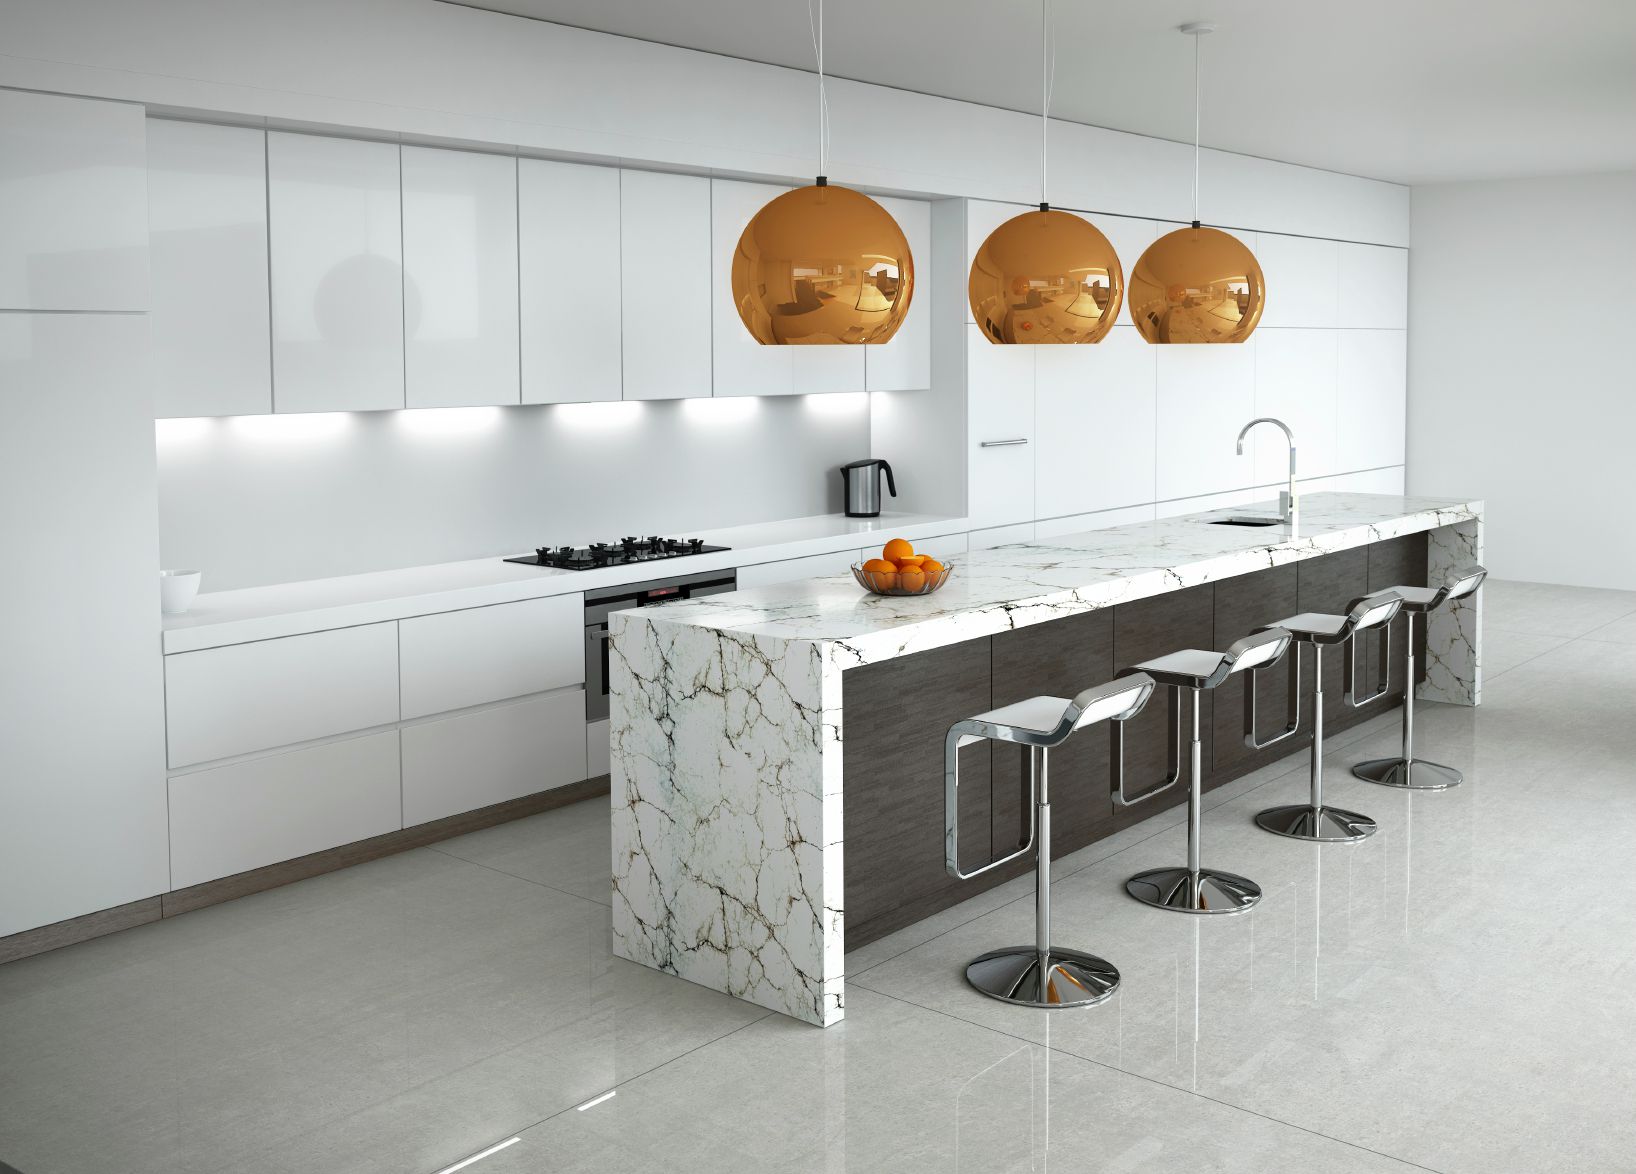 marble floor design for kitchen